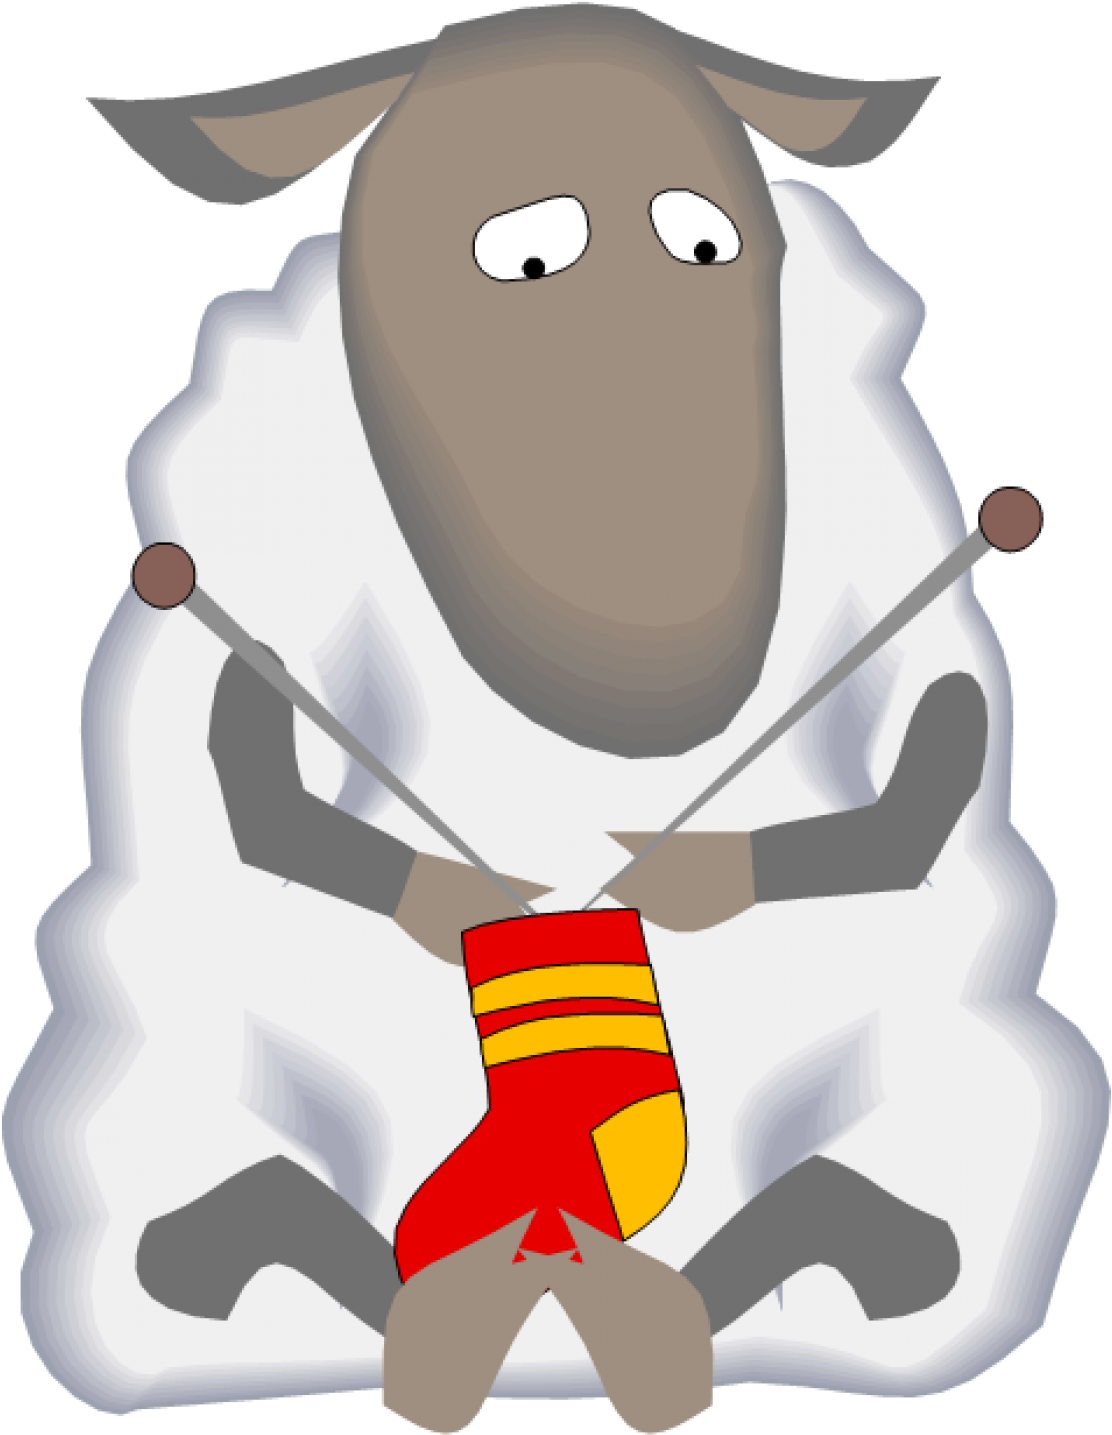 Knitting Sheep Cartoon Illustration PNG image